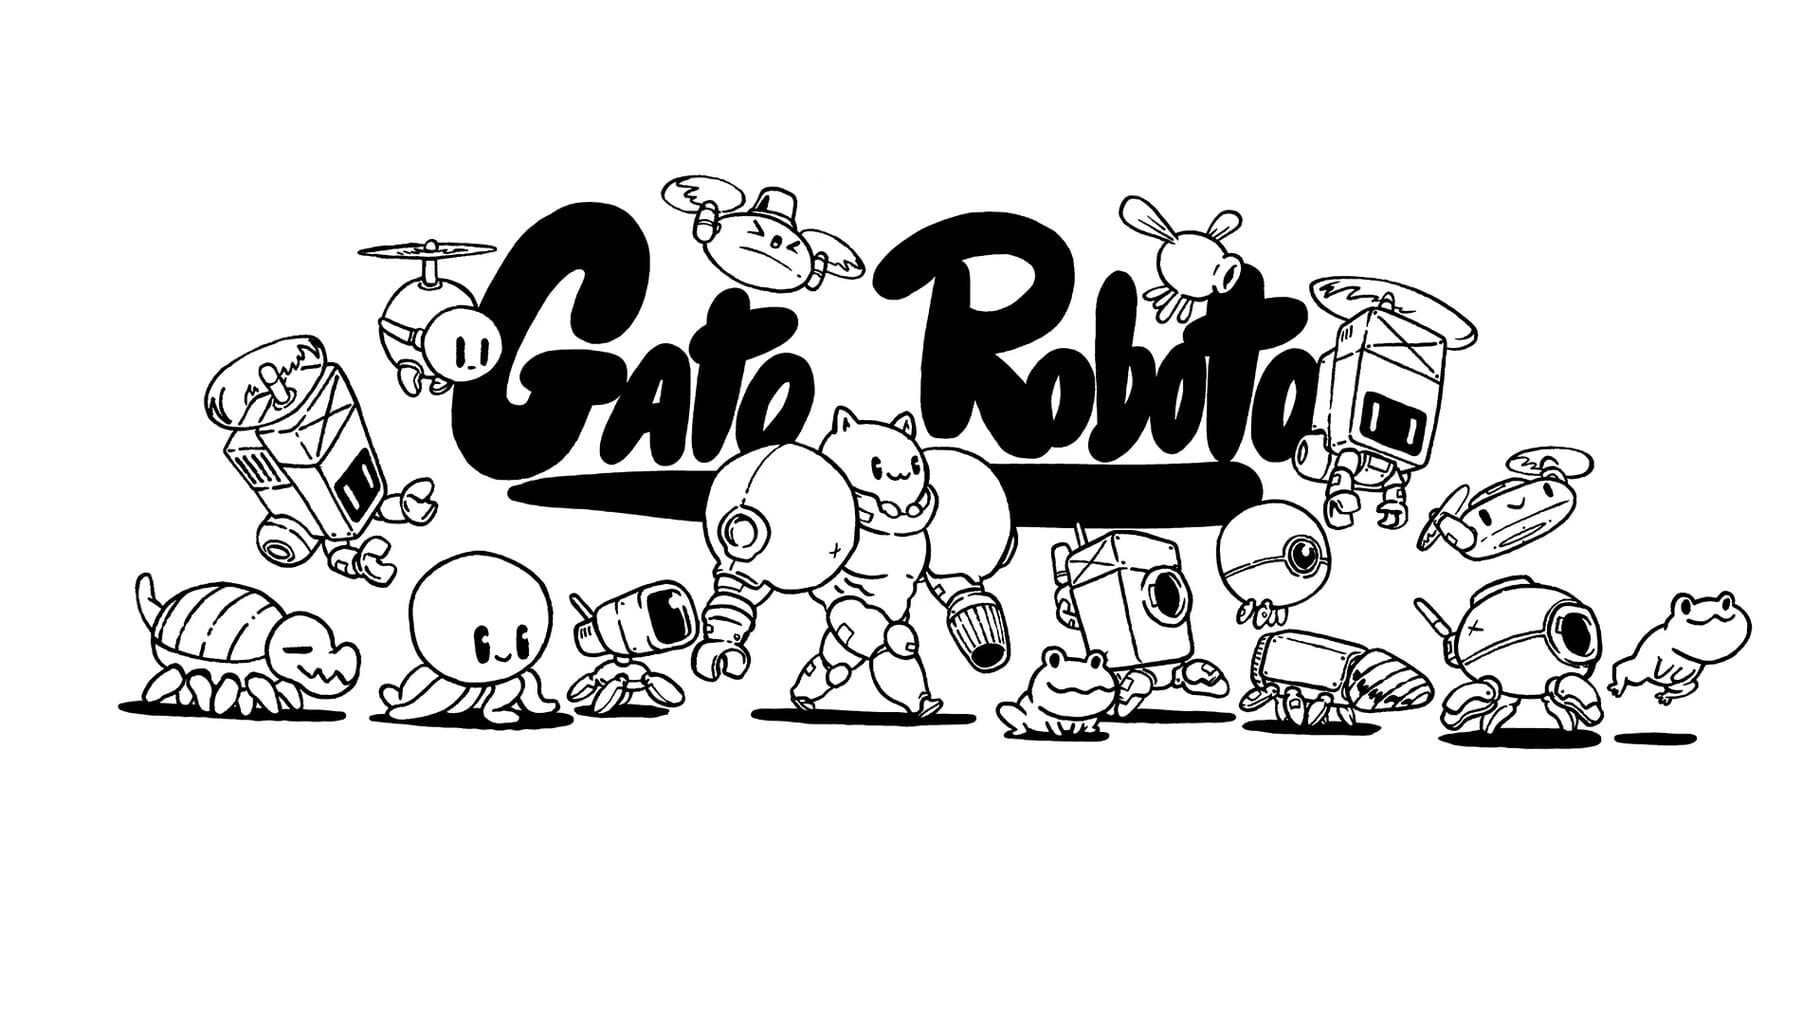 Artwork for Gato Roboto